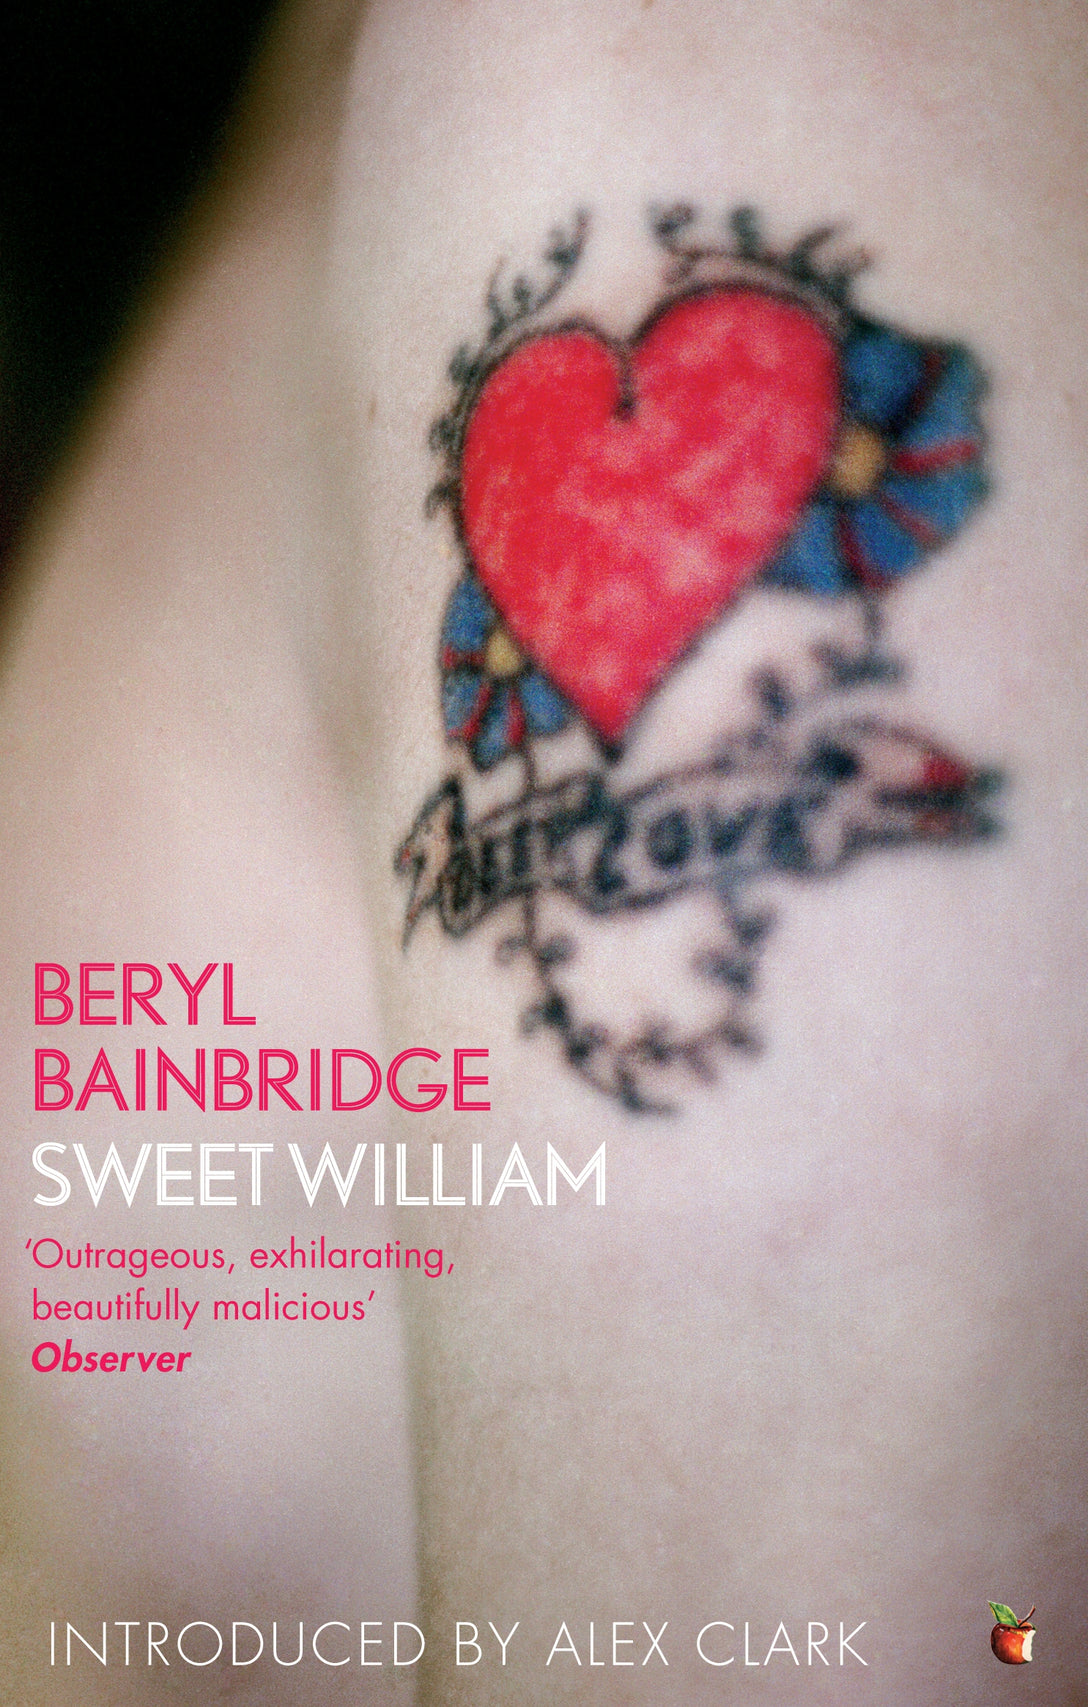 Sweet William by Beryl Bainbridge